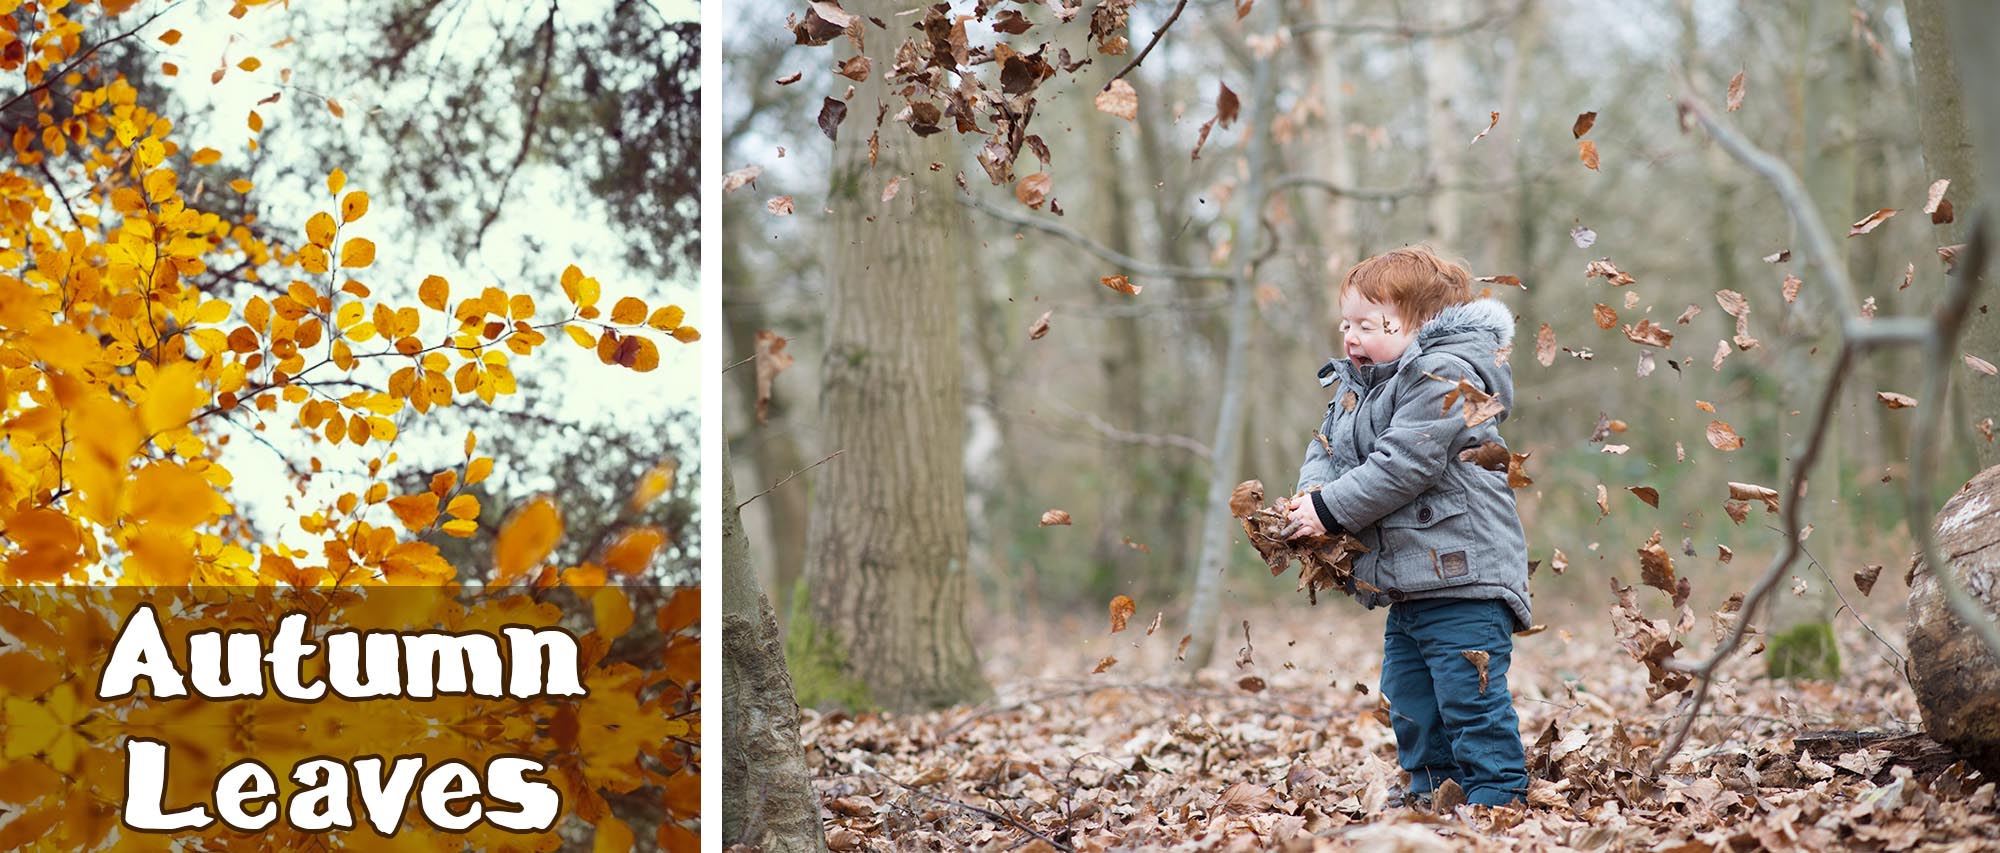 Child having October fun in Autumn Leaves 